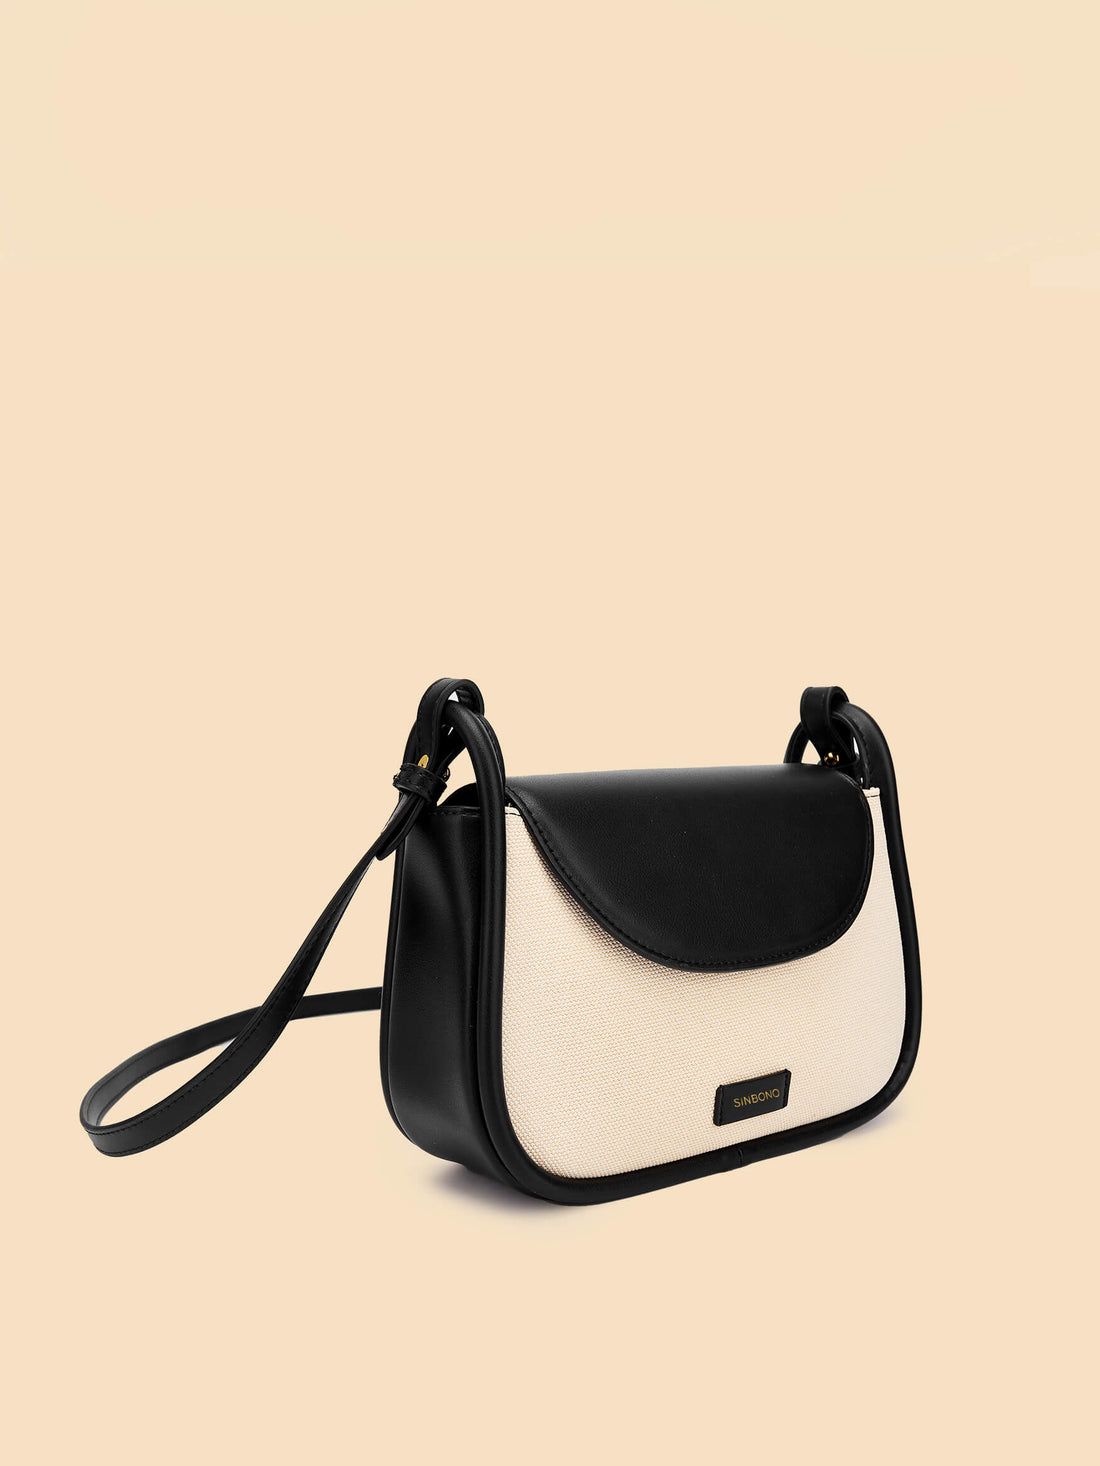 SINBONO Ivory&Black Crossbody Bag- High-quality Soft Vegan Leather Bag